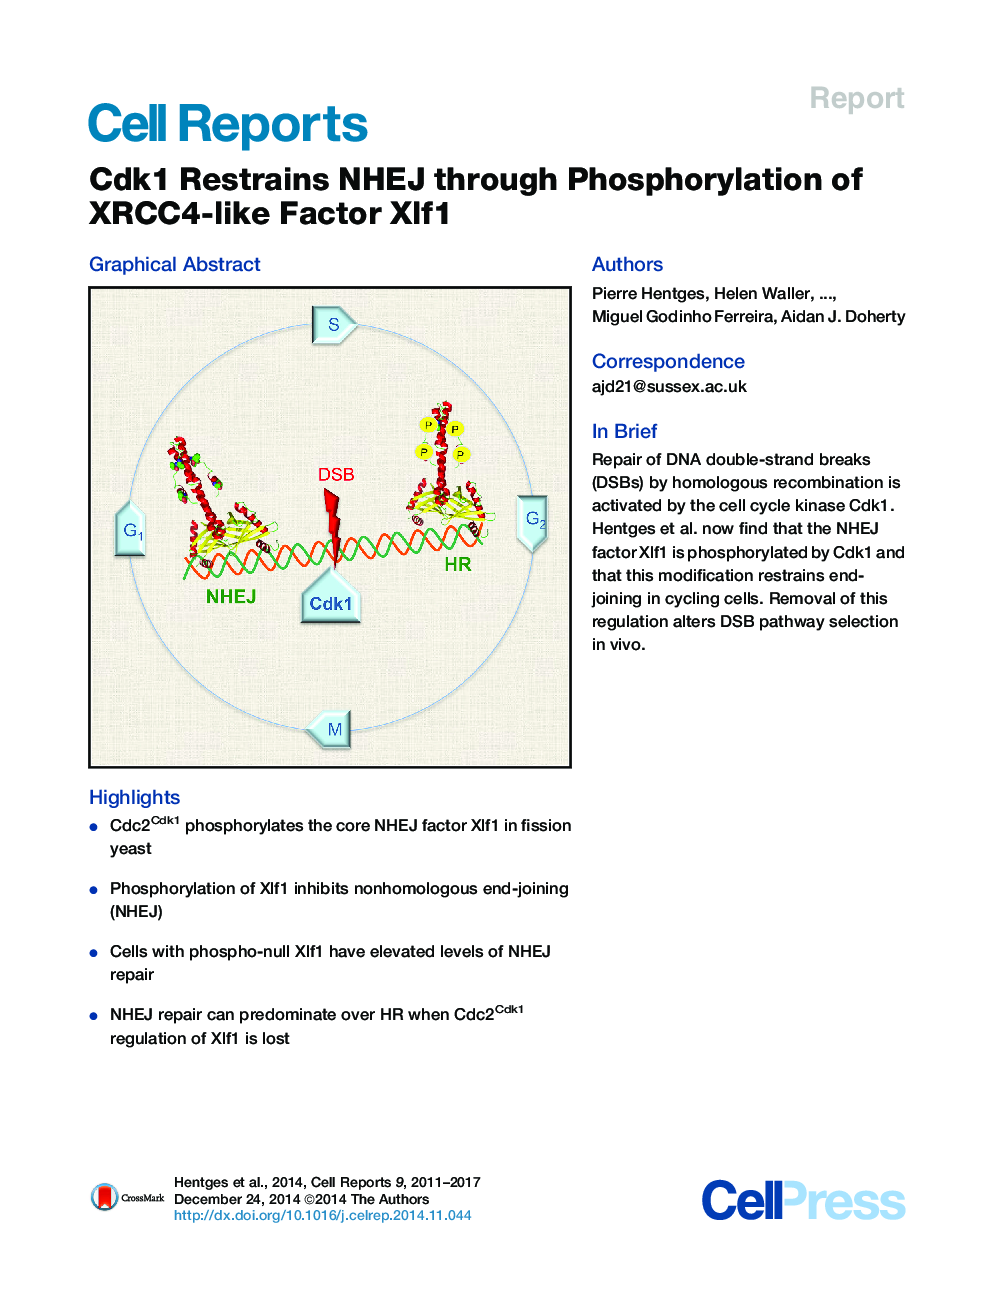 Cdk1 Restrains NHEJ through Phosphorylation of XRCC4-like Factor Xlf1 